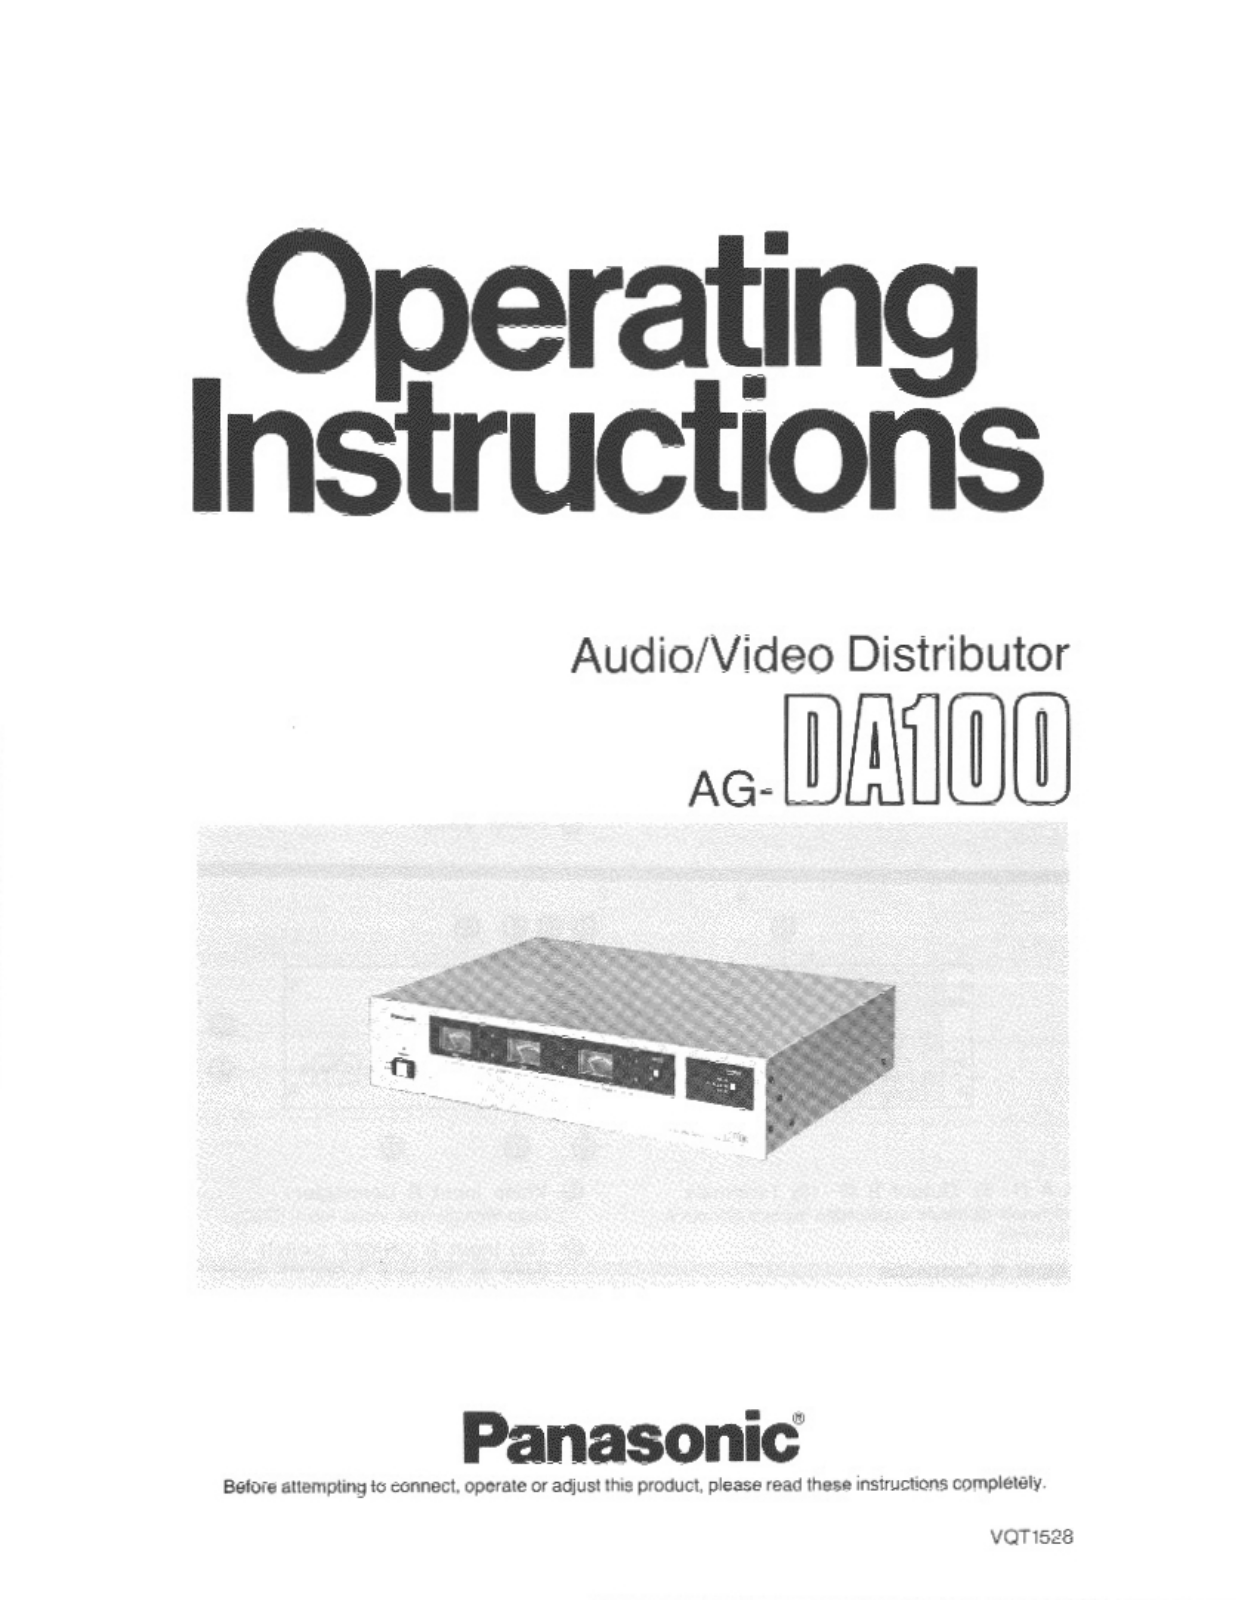 Panasonic AG-DA100 User Manual